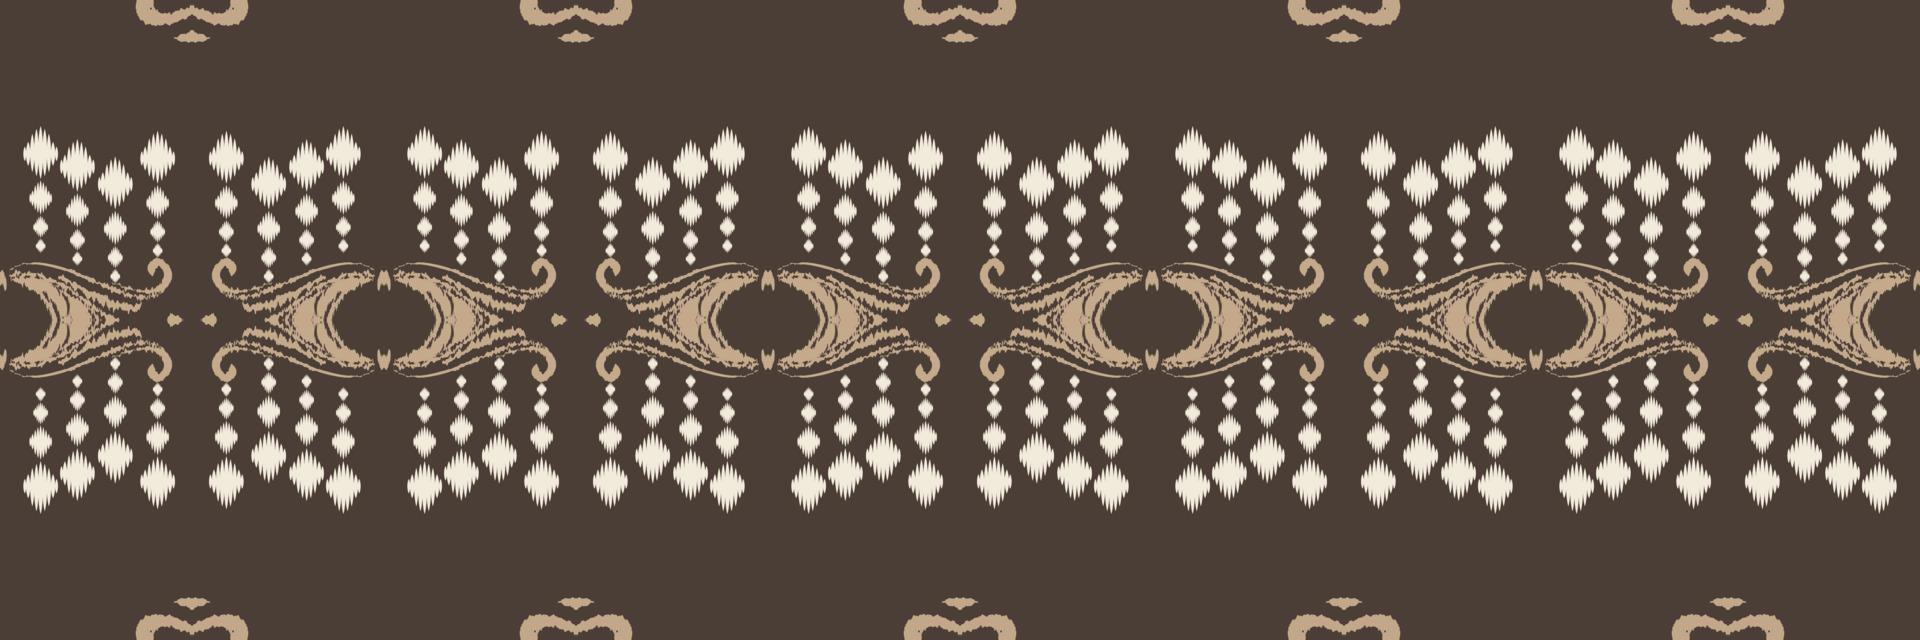 ikat designs batik têxtil padrão sem costura design de vetor digital para impressão saree kurti borneo tecido borda pincel símbolos amostras elegantes